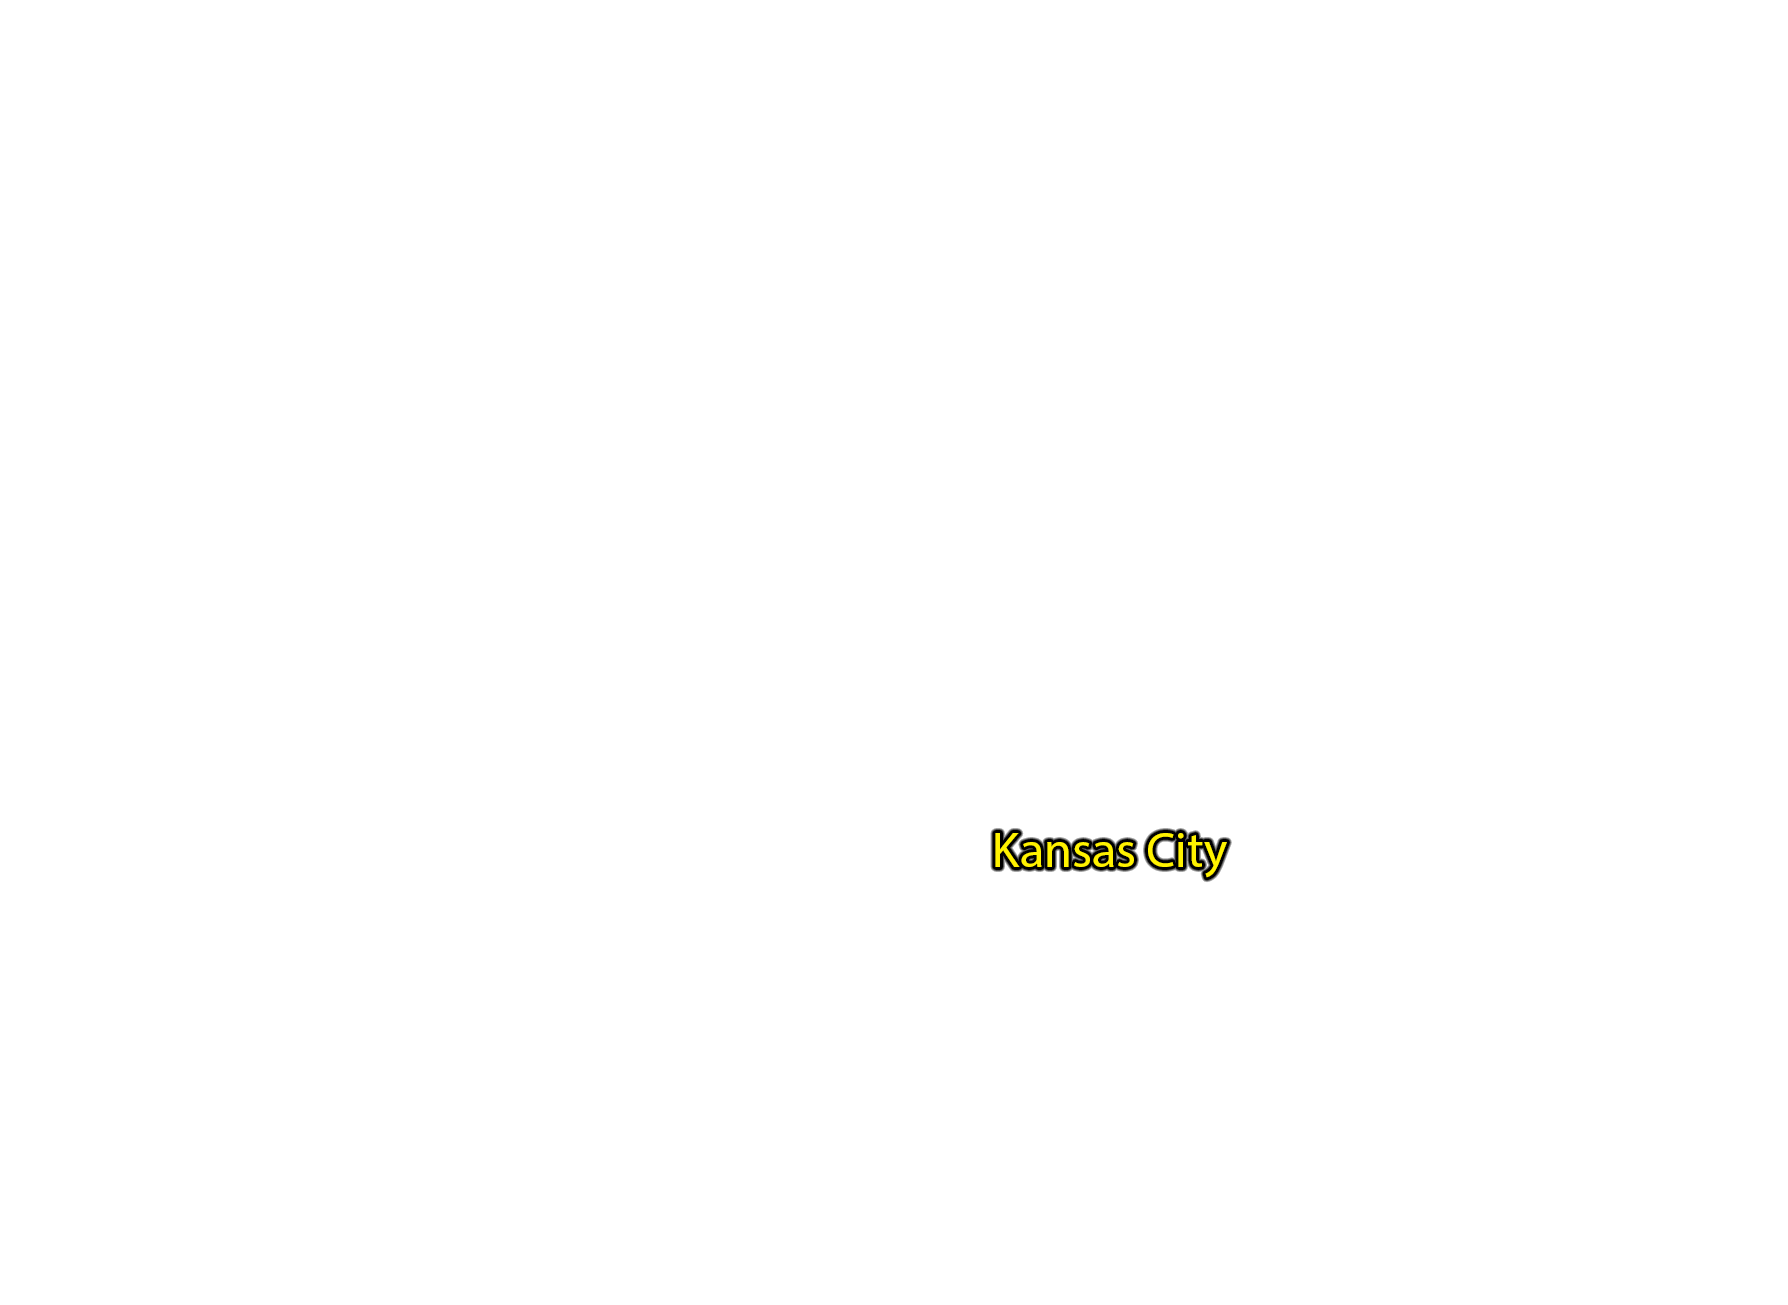 Kansas-City label with glow